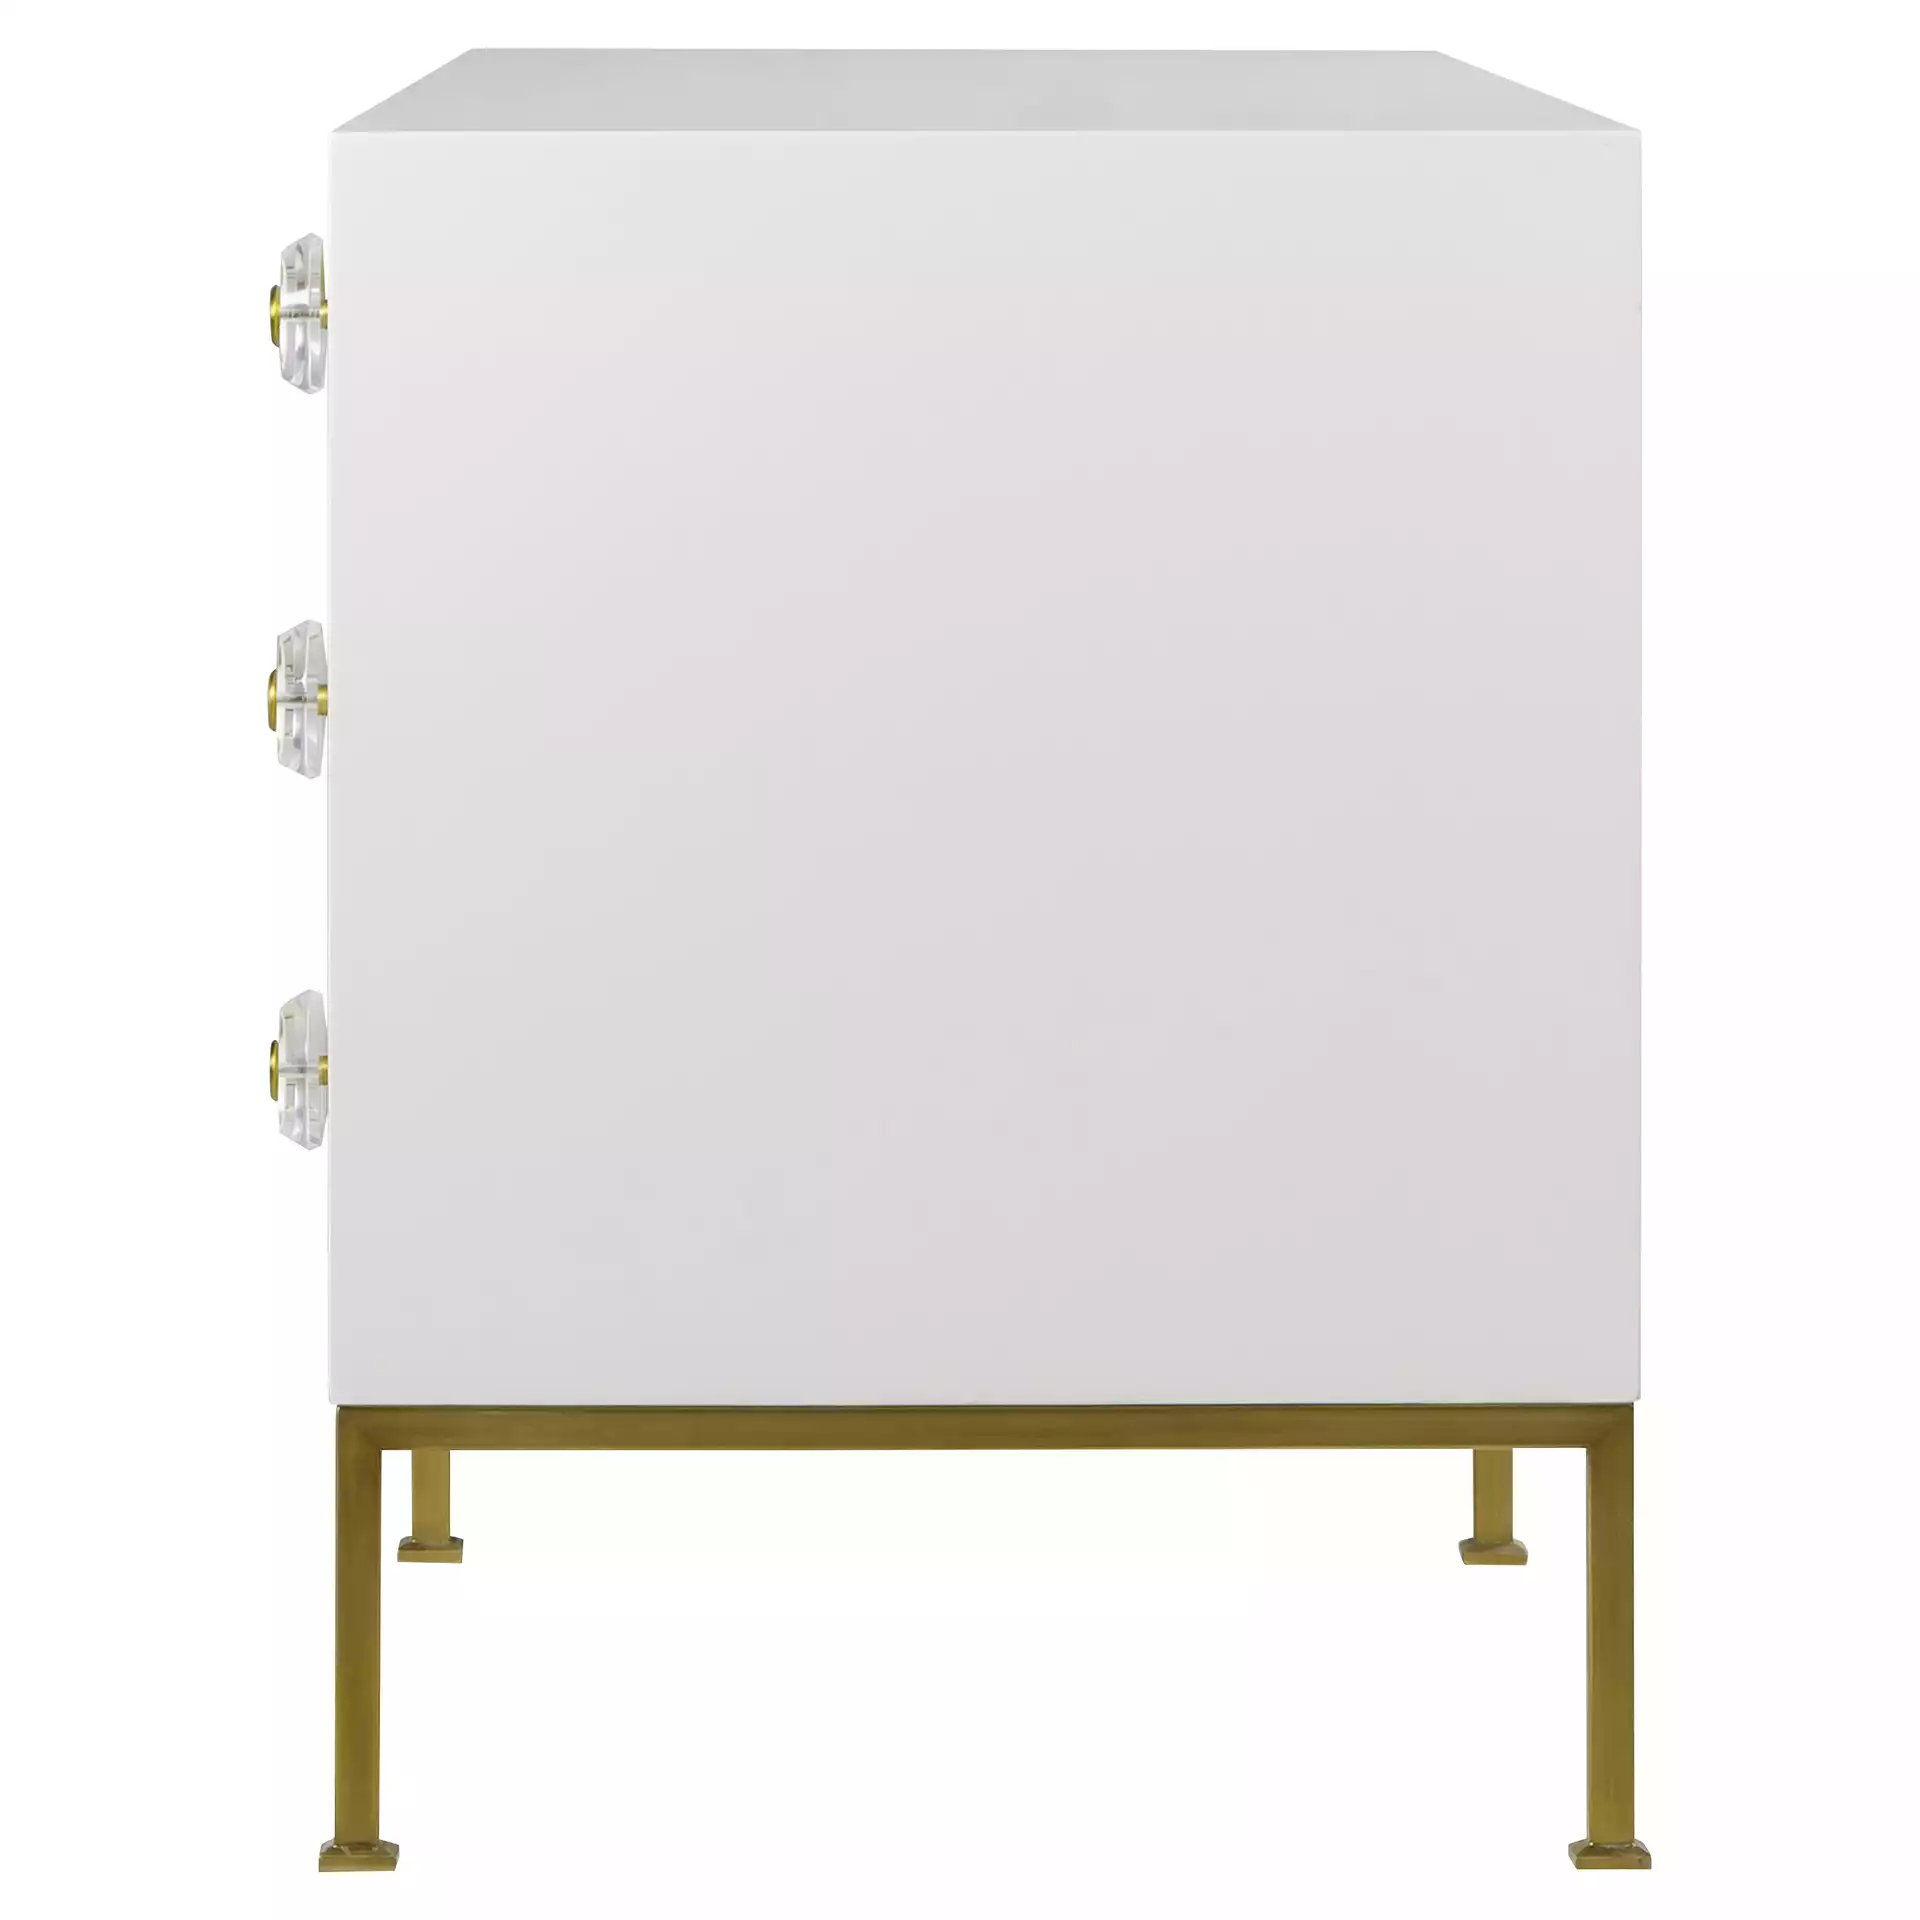 Resource Decor Modern Classic White Wood Frame Gold Base 6 Drawer Dresser